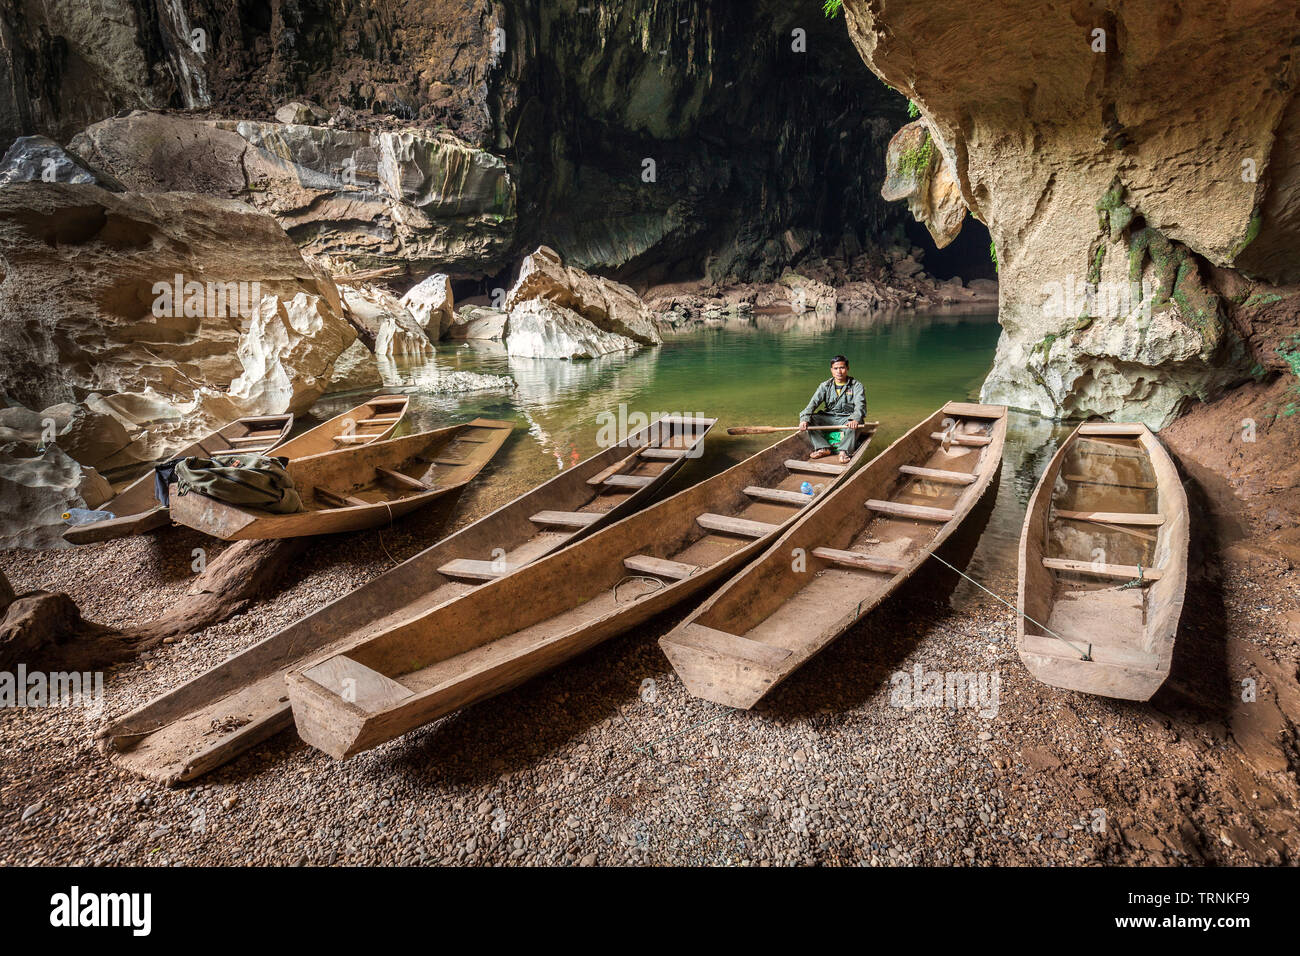 Tourist boats with guide, Xe Bang Fai river cave entrance, Laos Stock Photo  - Alamy